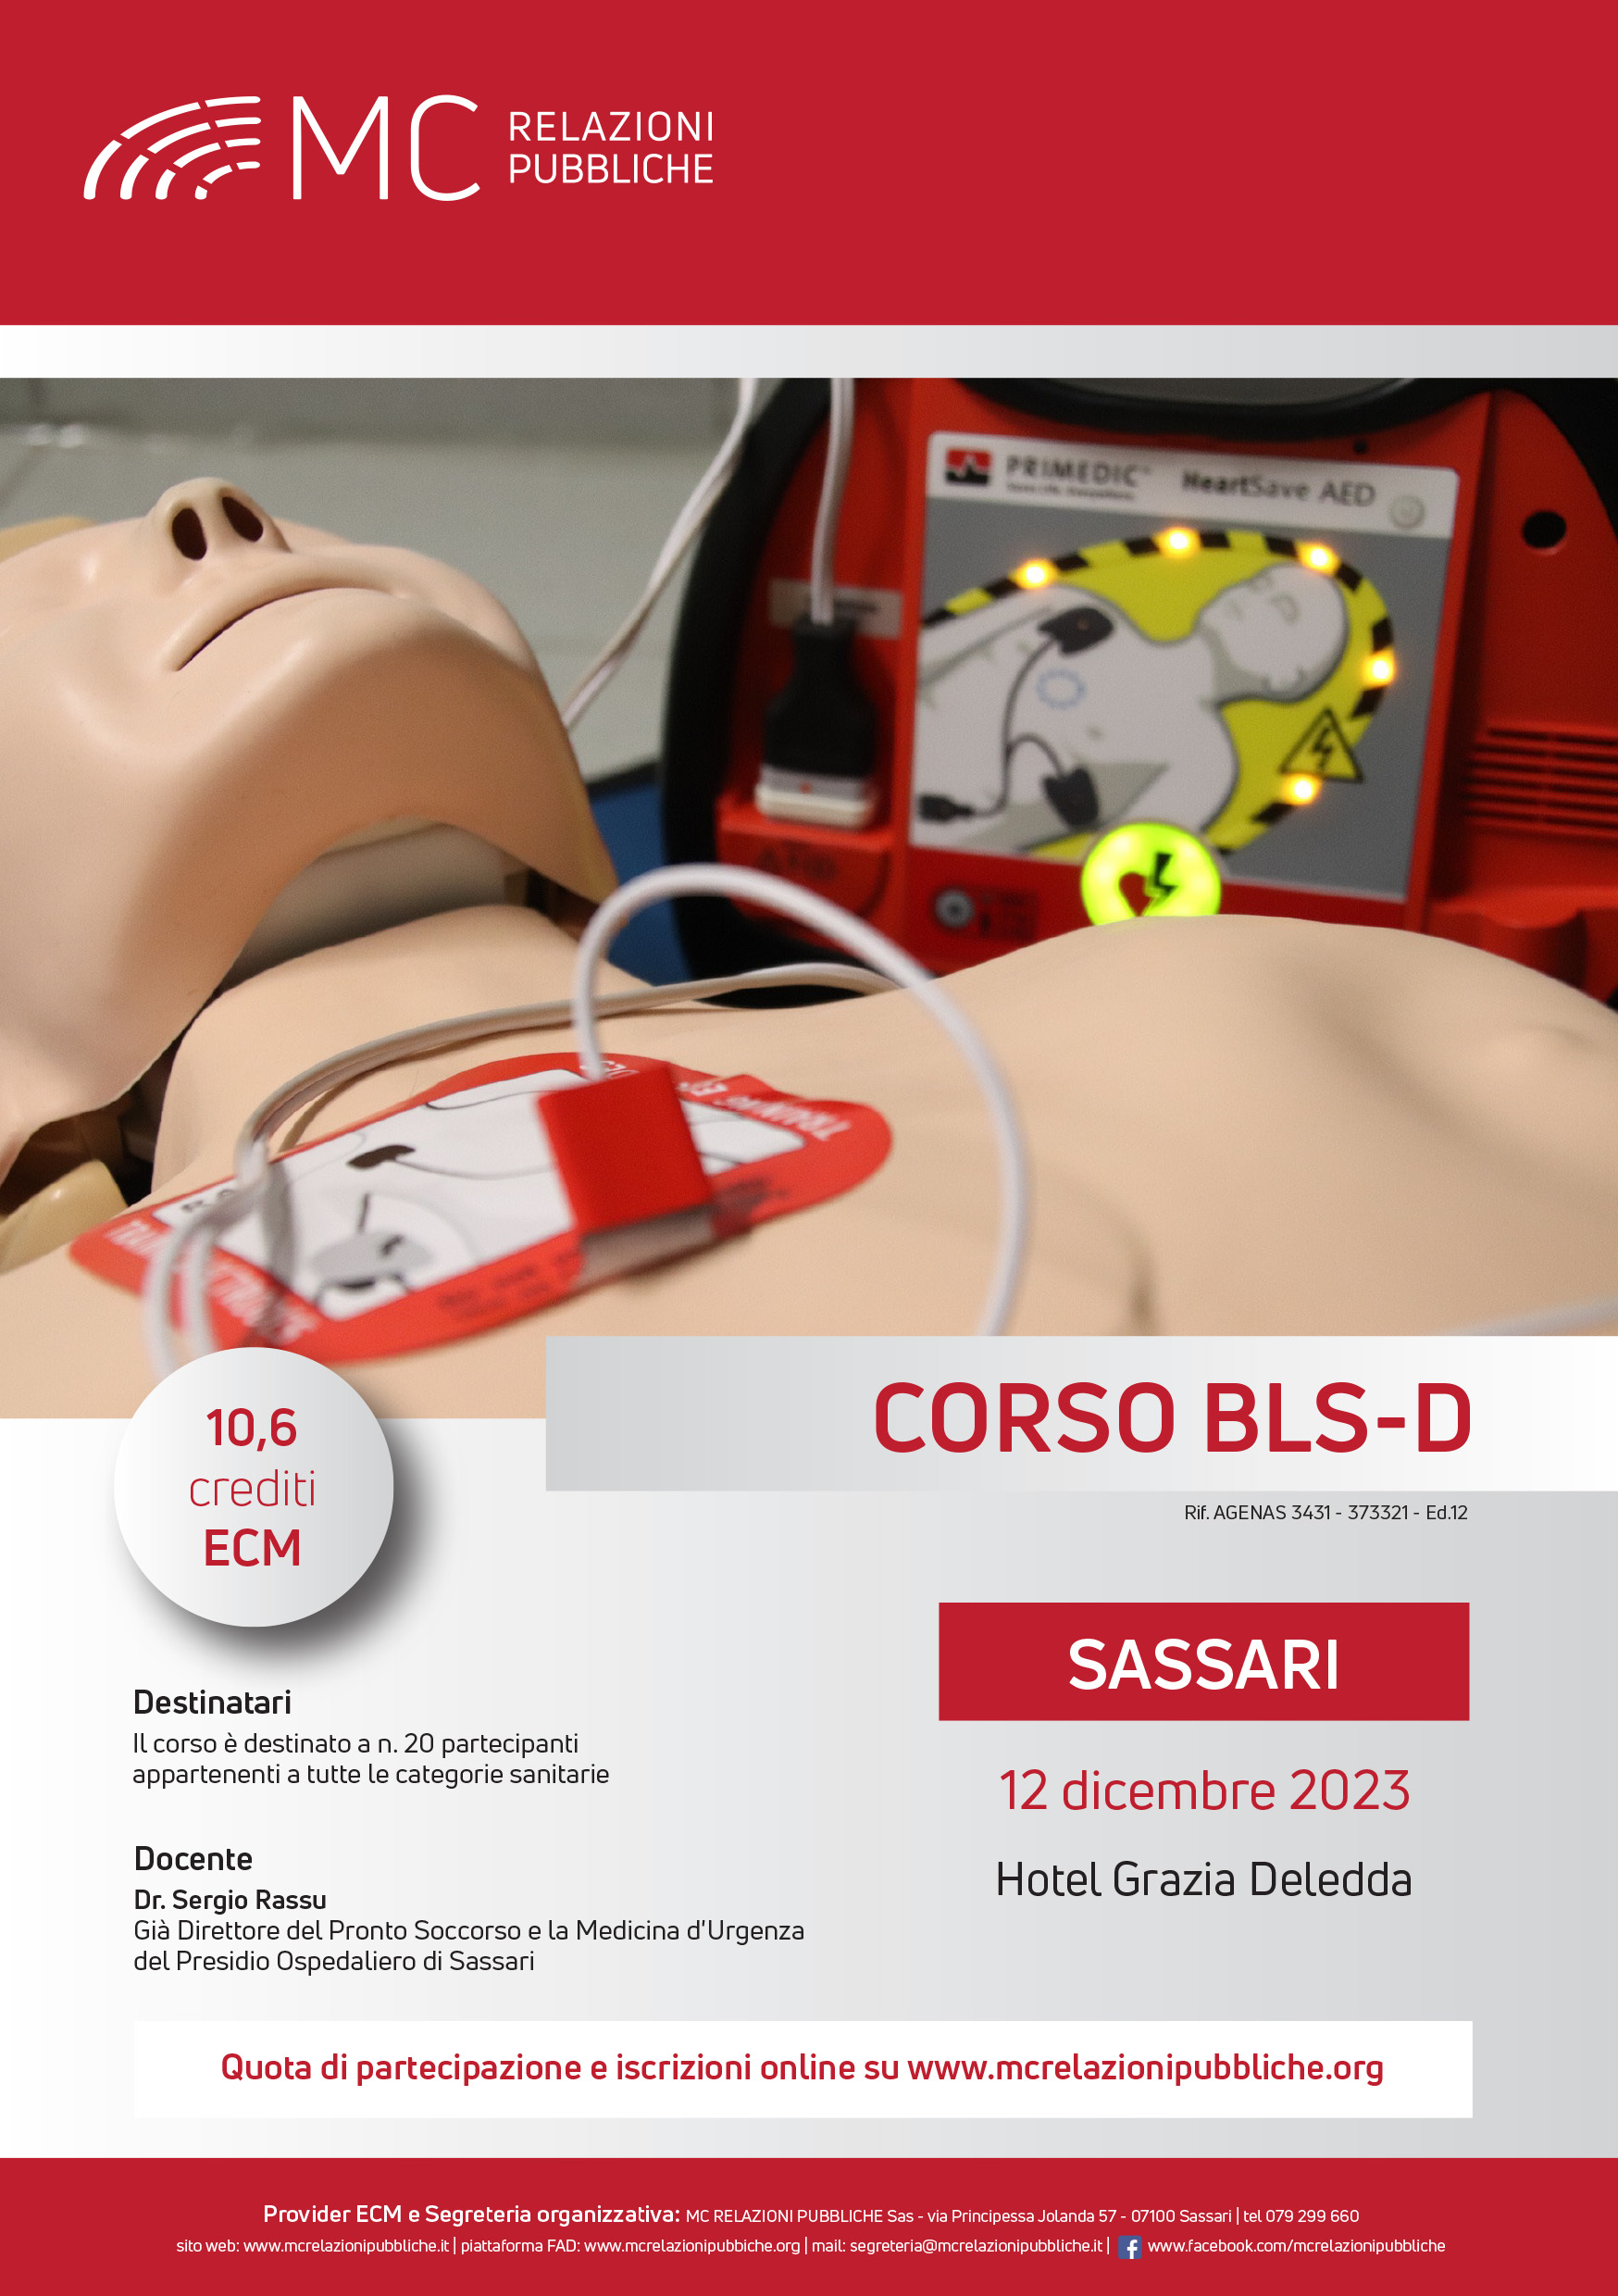 Corso BLS-D. Basic life support-defibrillation ed.12